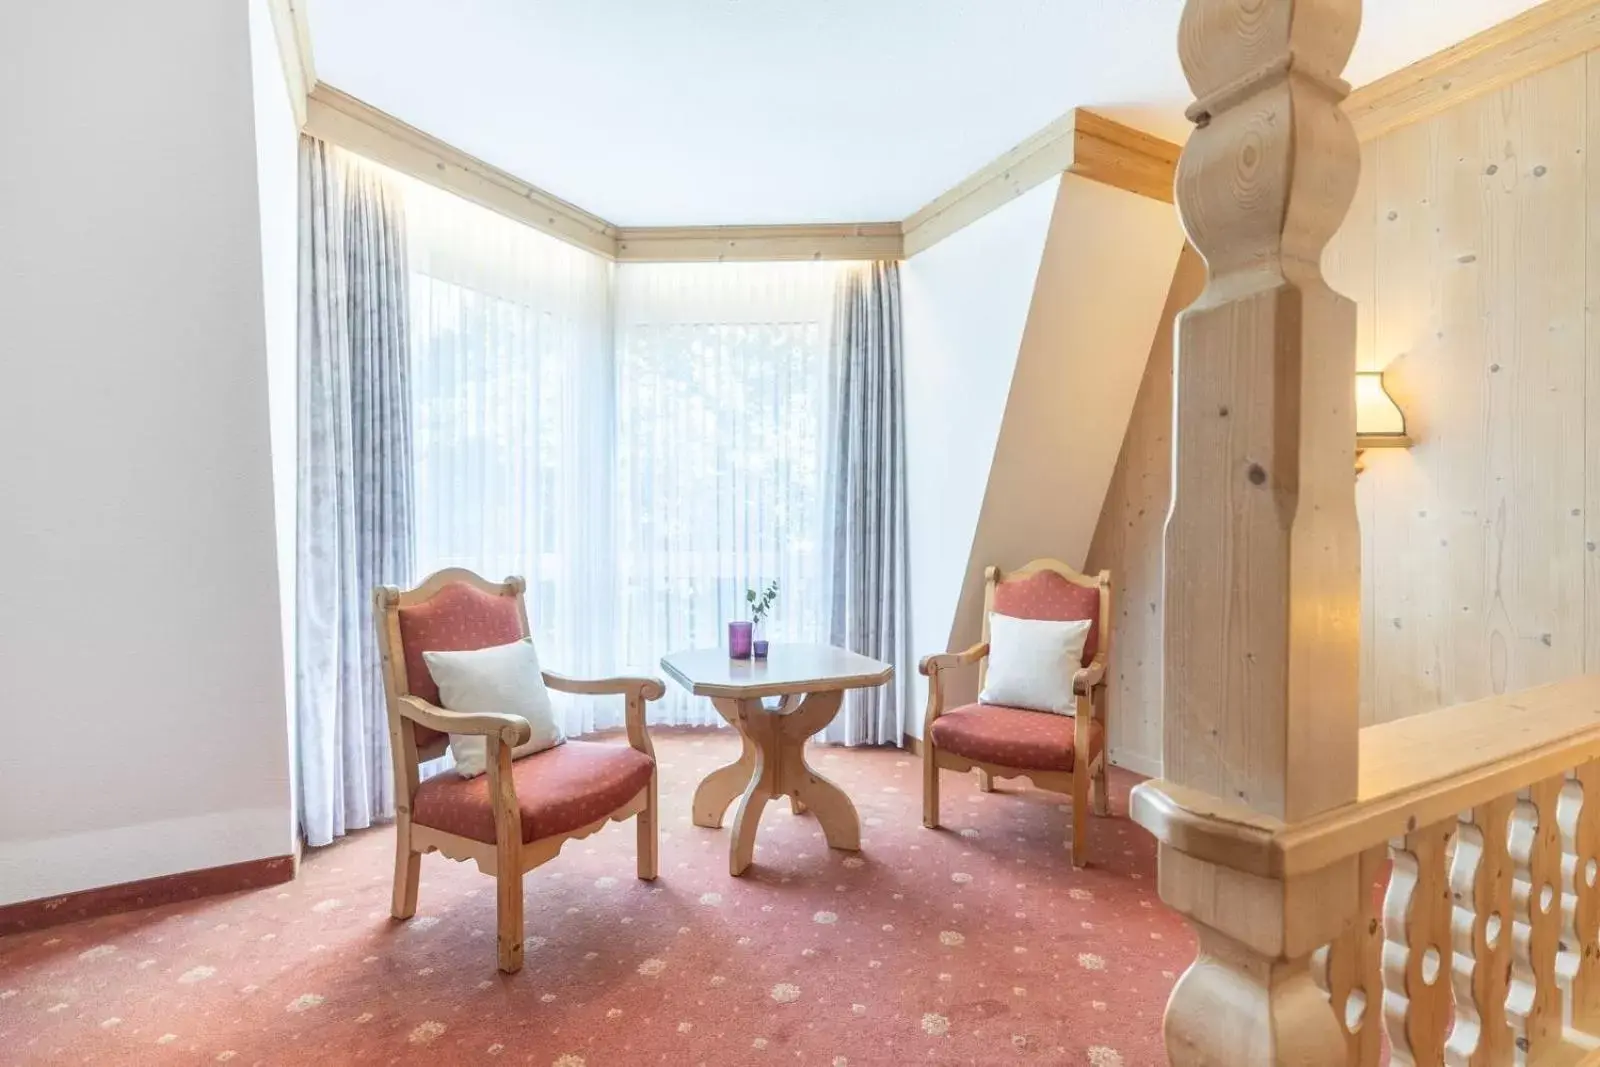 Photo of the whole room, Seating Area in Select Hotel Elisenhof Mönchengladbach